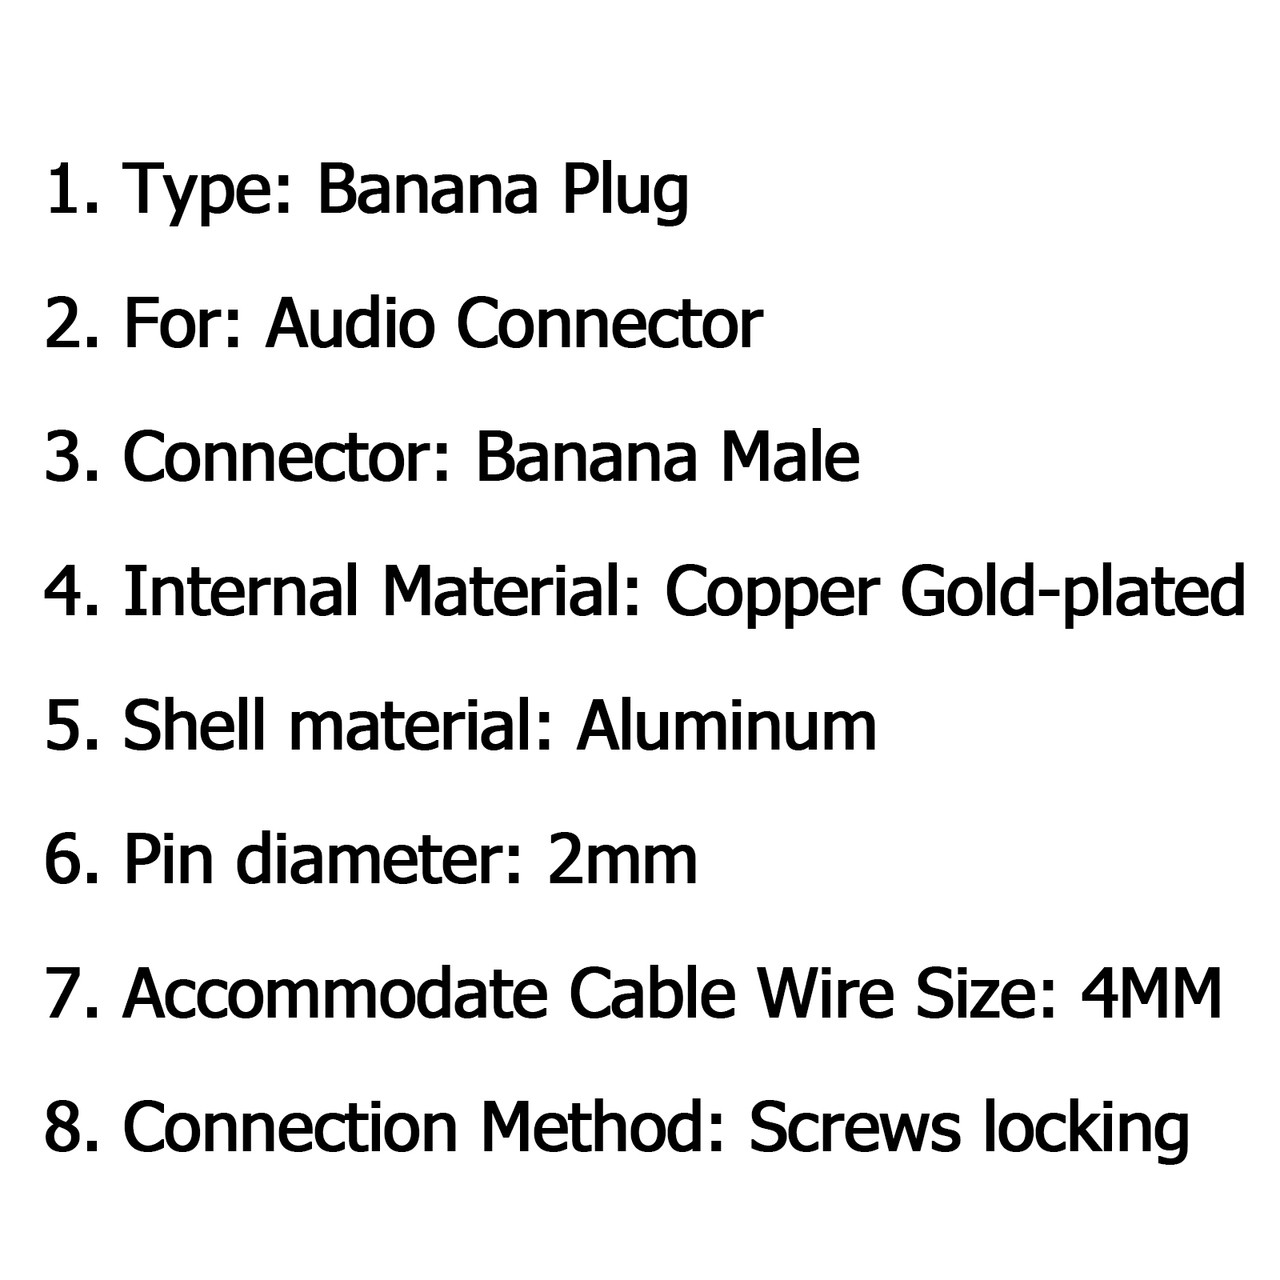 Mad Hornets 1PCS 2mm Banana Pin Plug Gold Plated Aluminum Shell Audio Speaker Adapter Blk (I002-A1000-Blk-1PCS)